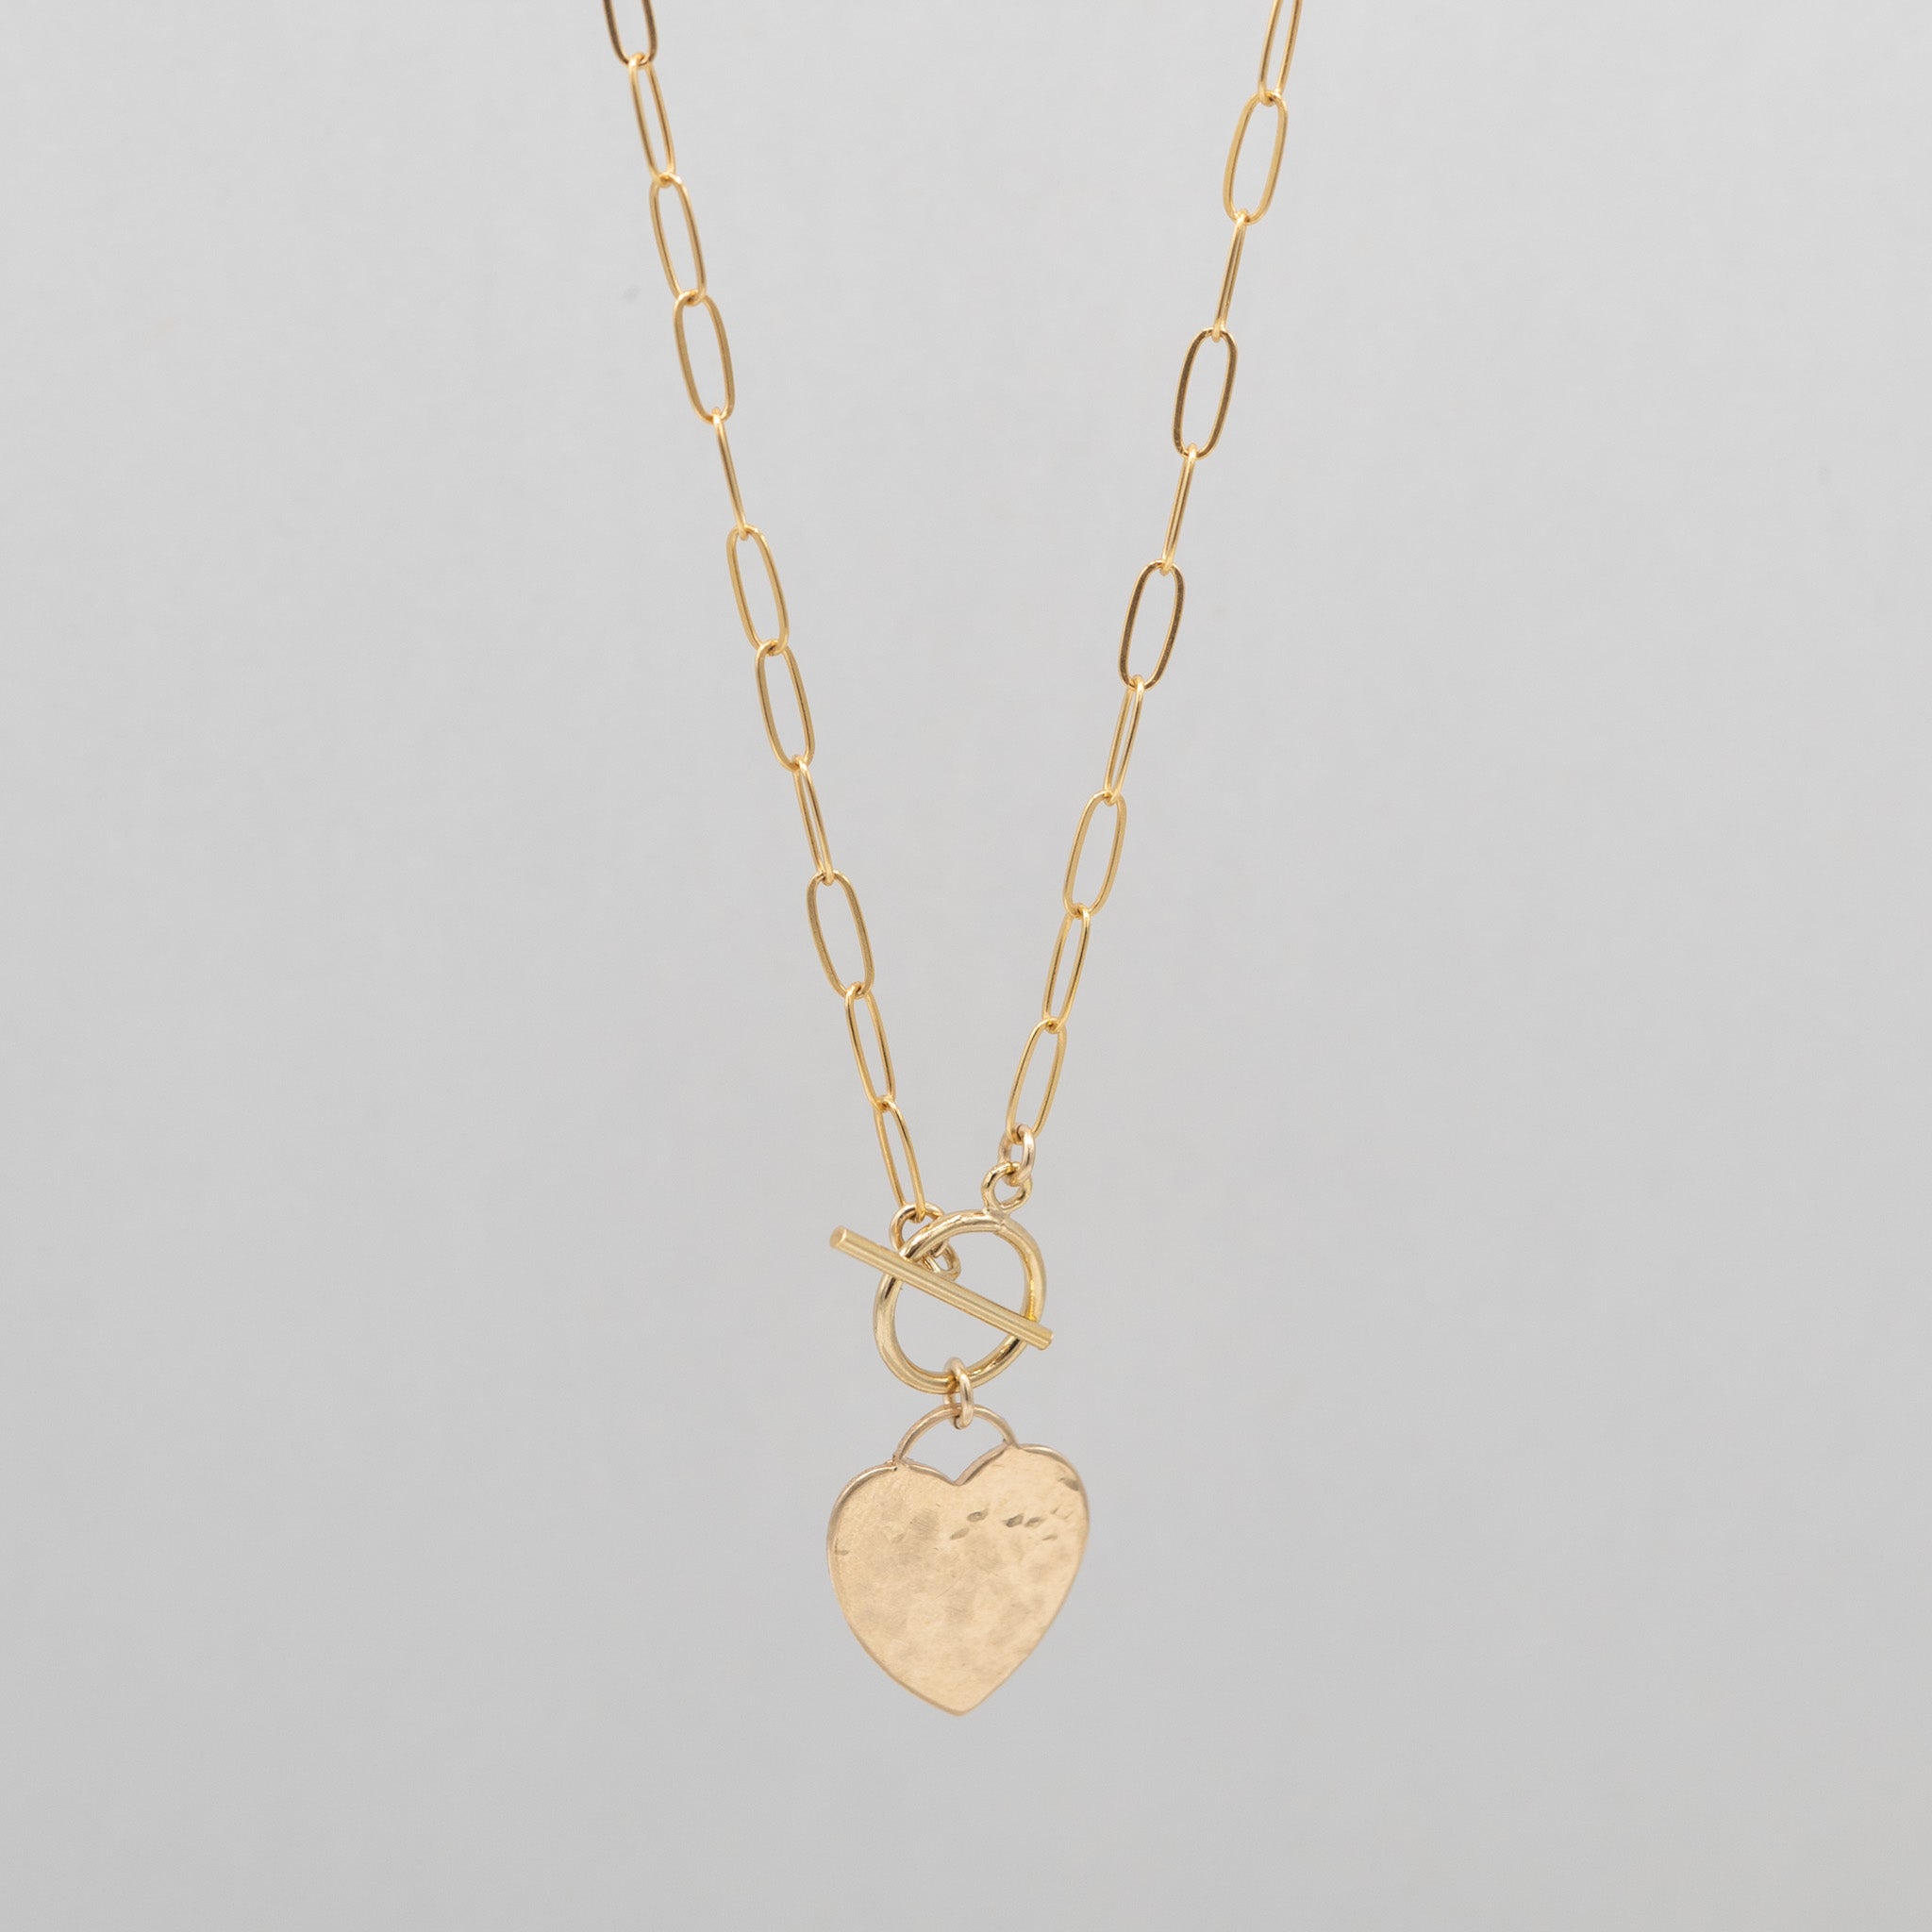 Medium 14k Gold Filled Heart Toggle Necklace